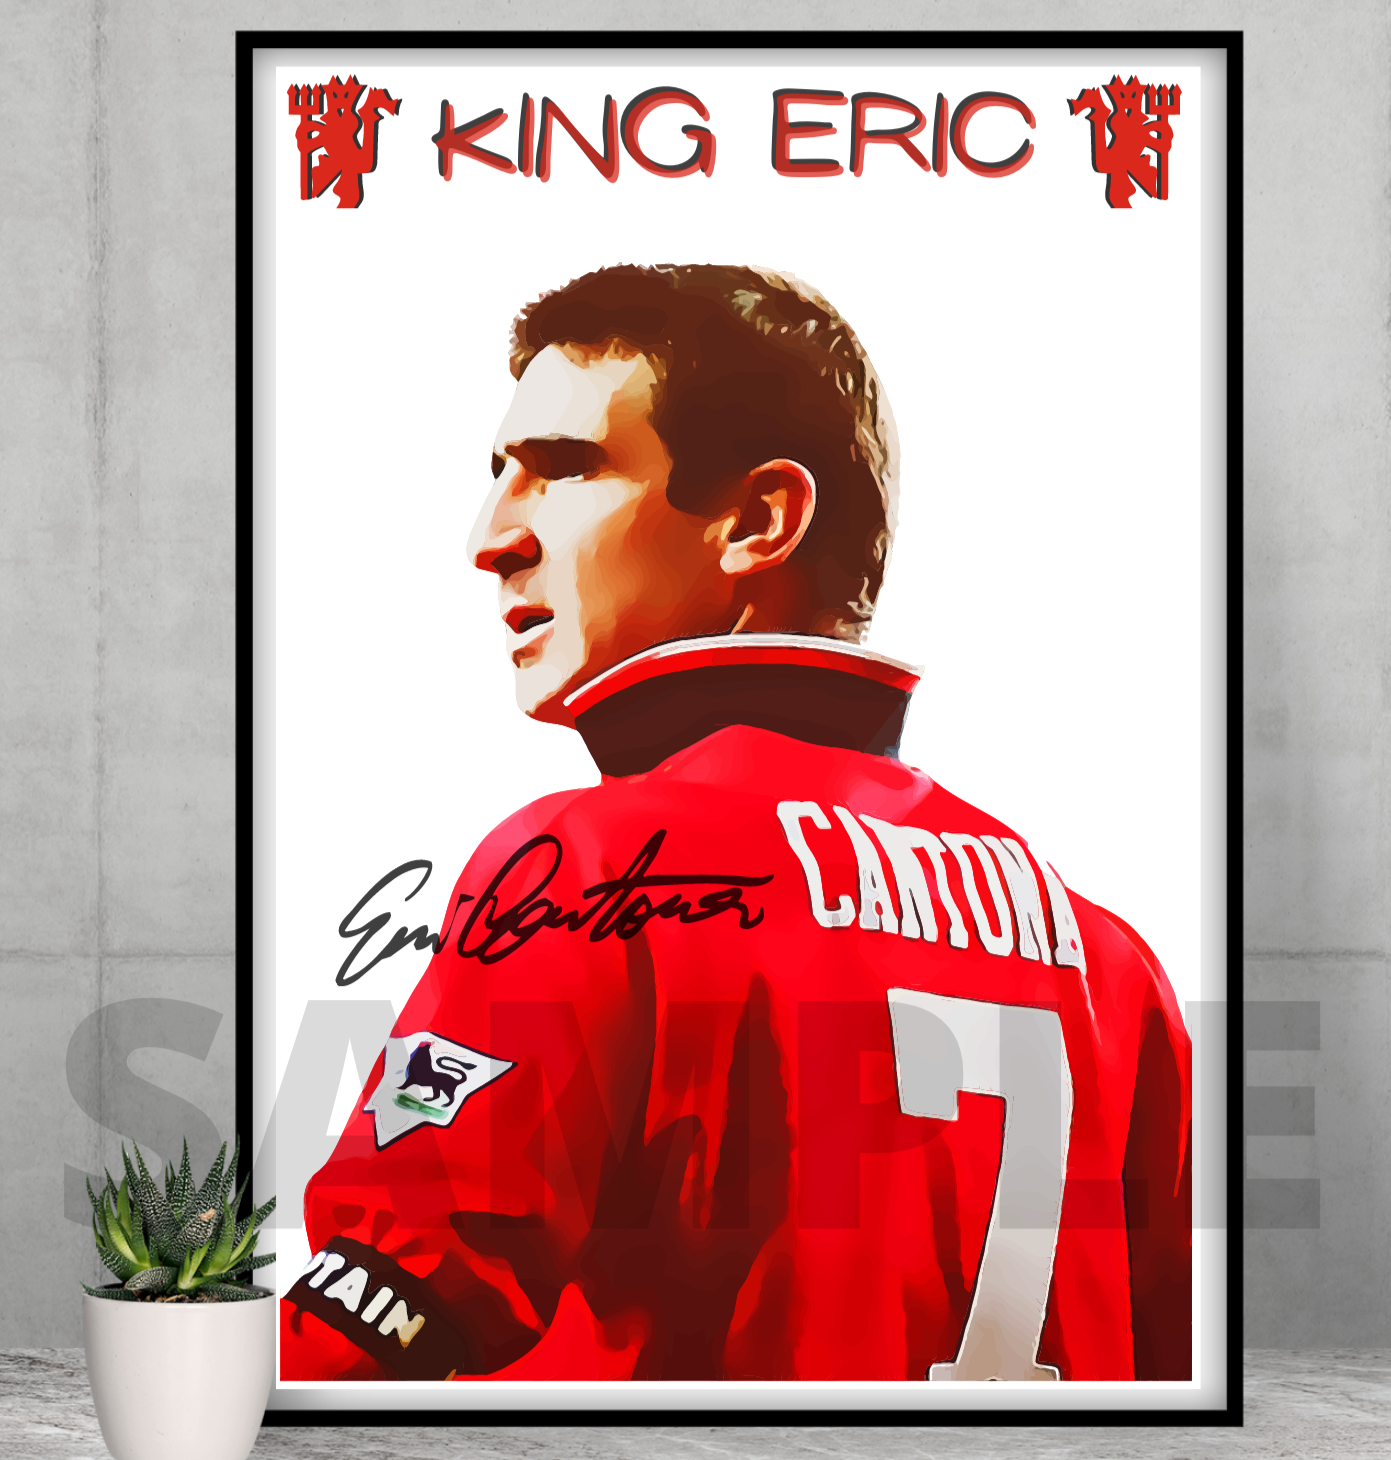 Eric Cantona exclusive Football signed collectable/memorabilia print